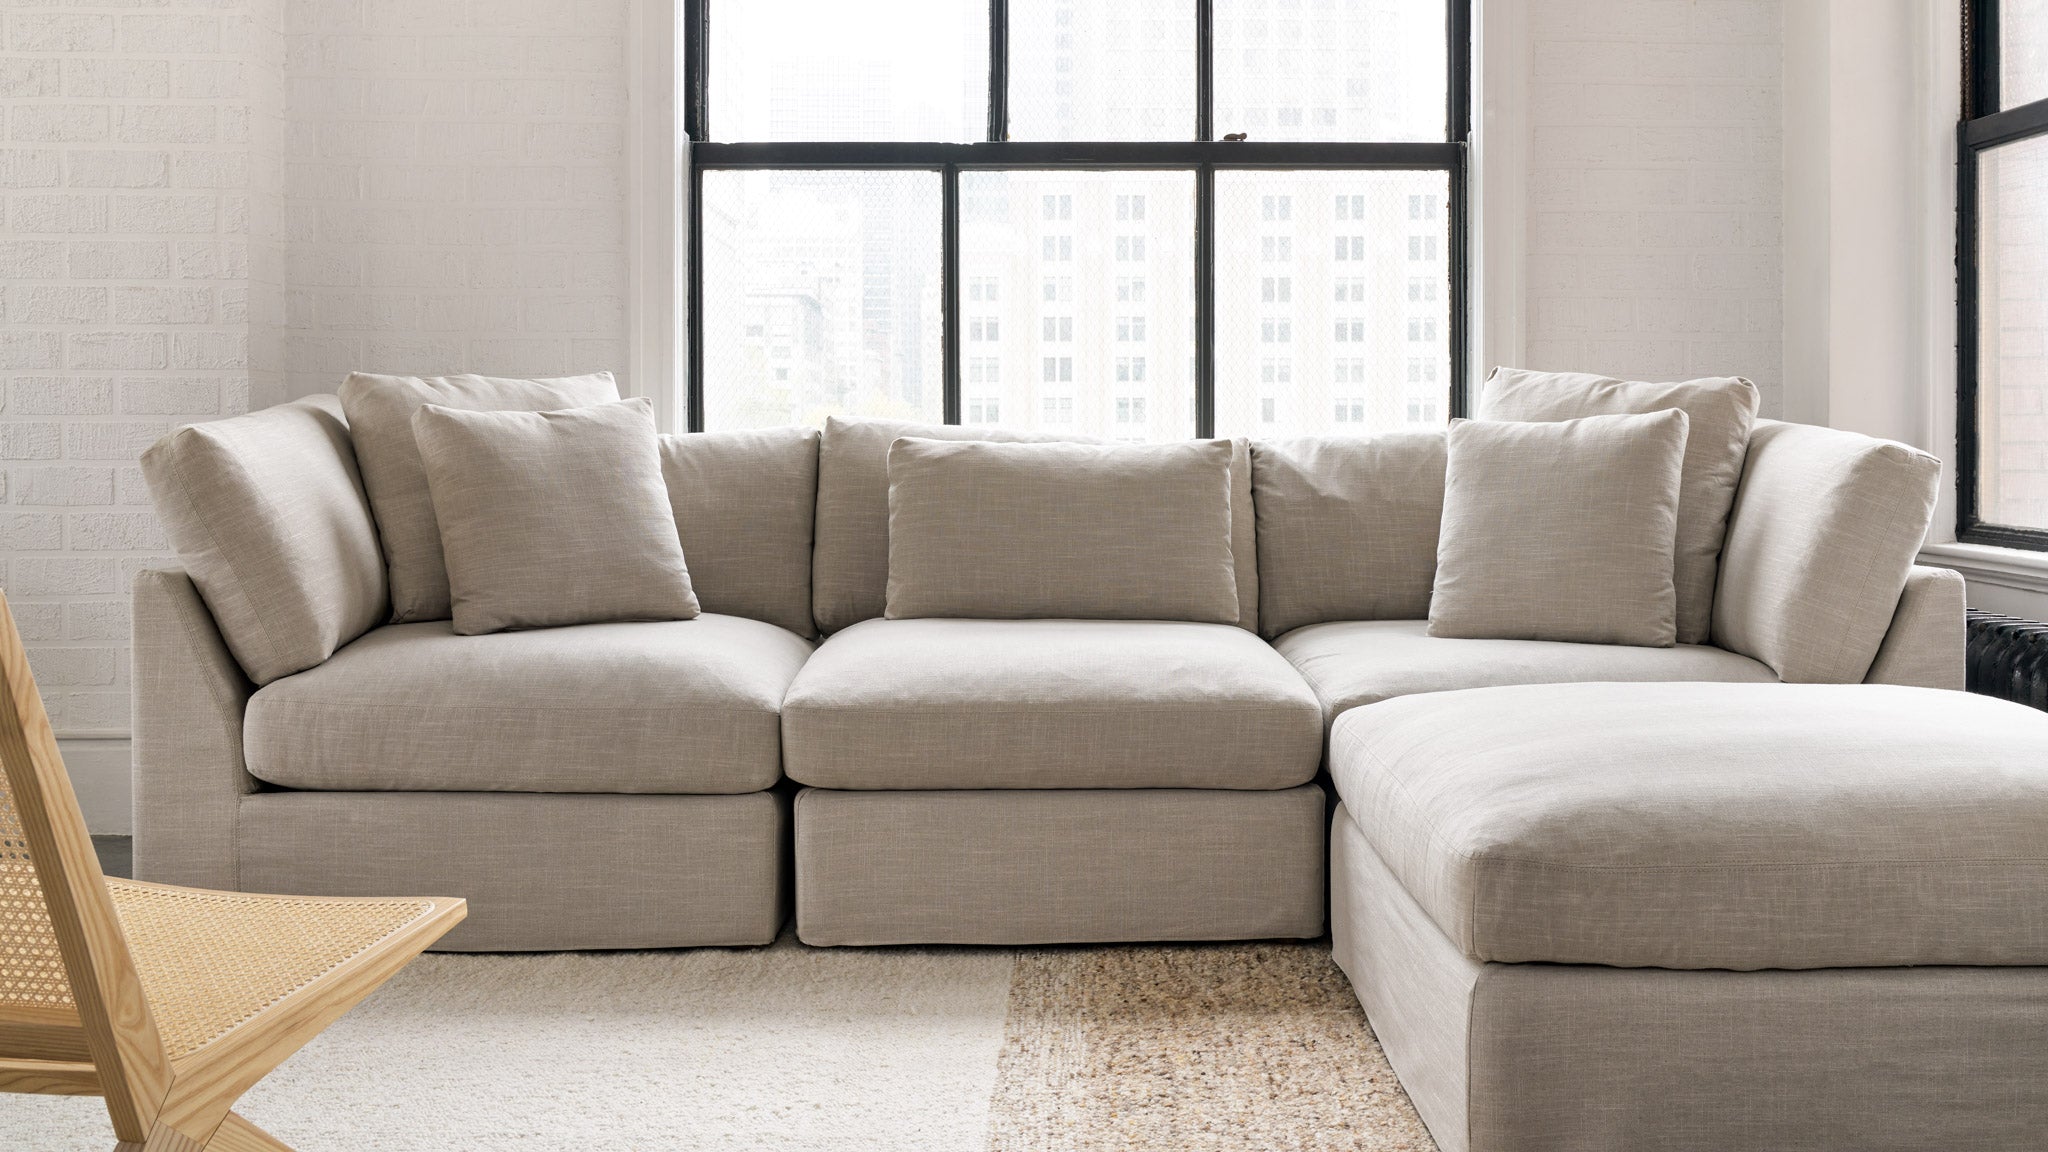 Get Together™ 3-Piece Modular Sofa, Standard, Light Pebble - Image 6